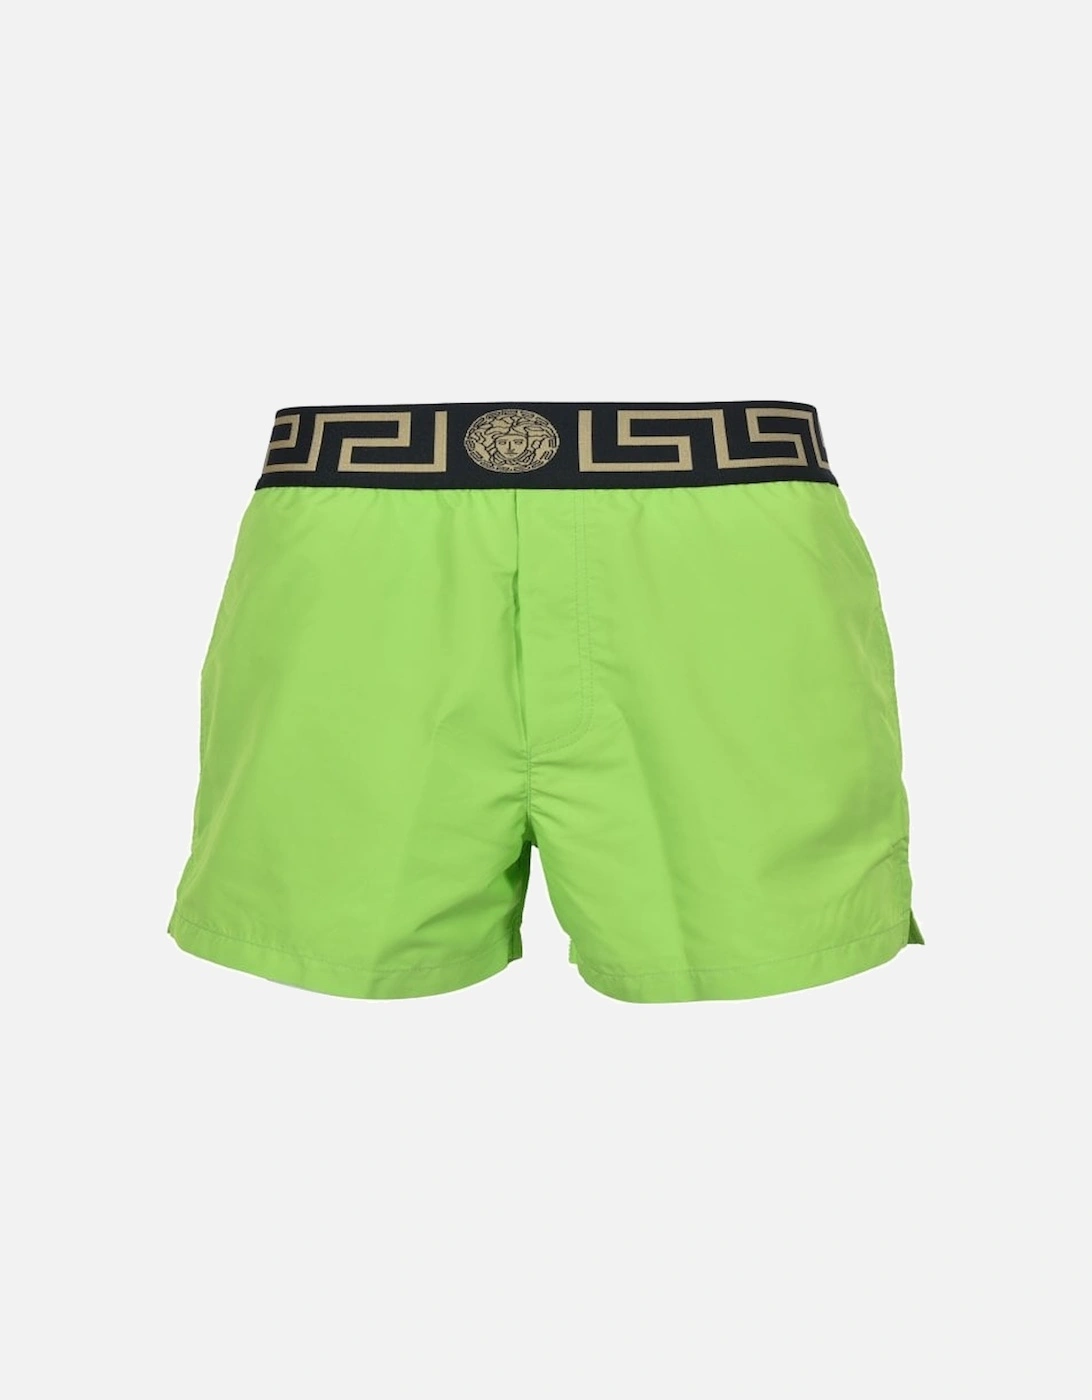 Iconic Greca Luxe Swim Shorts, Lime/black/gold, 5 of 4